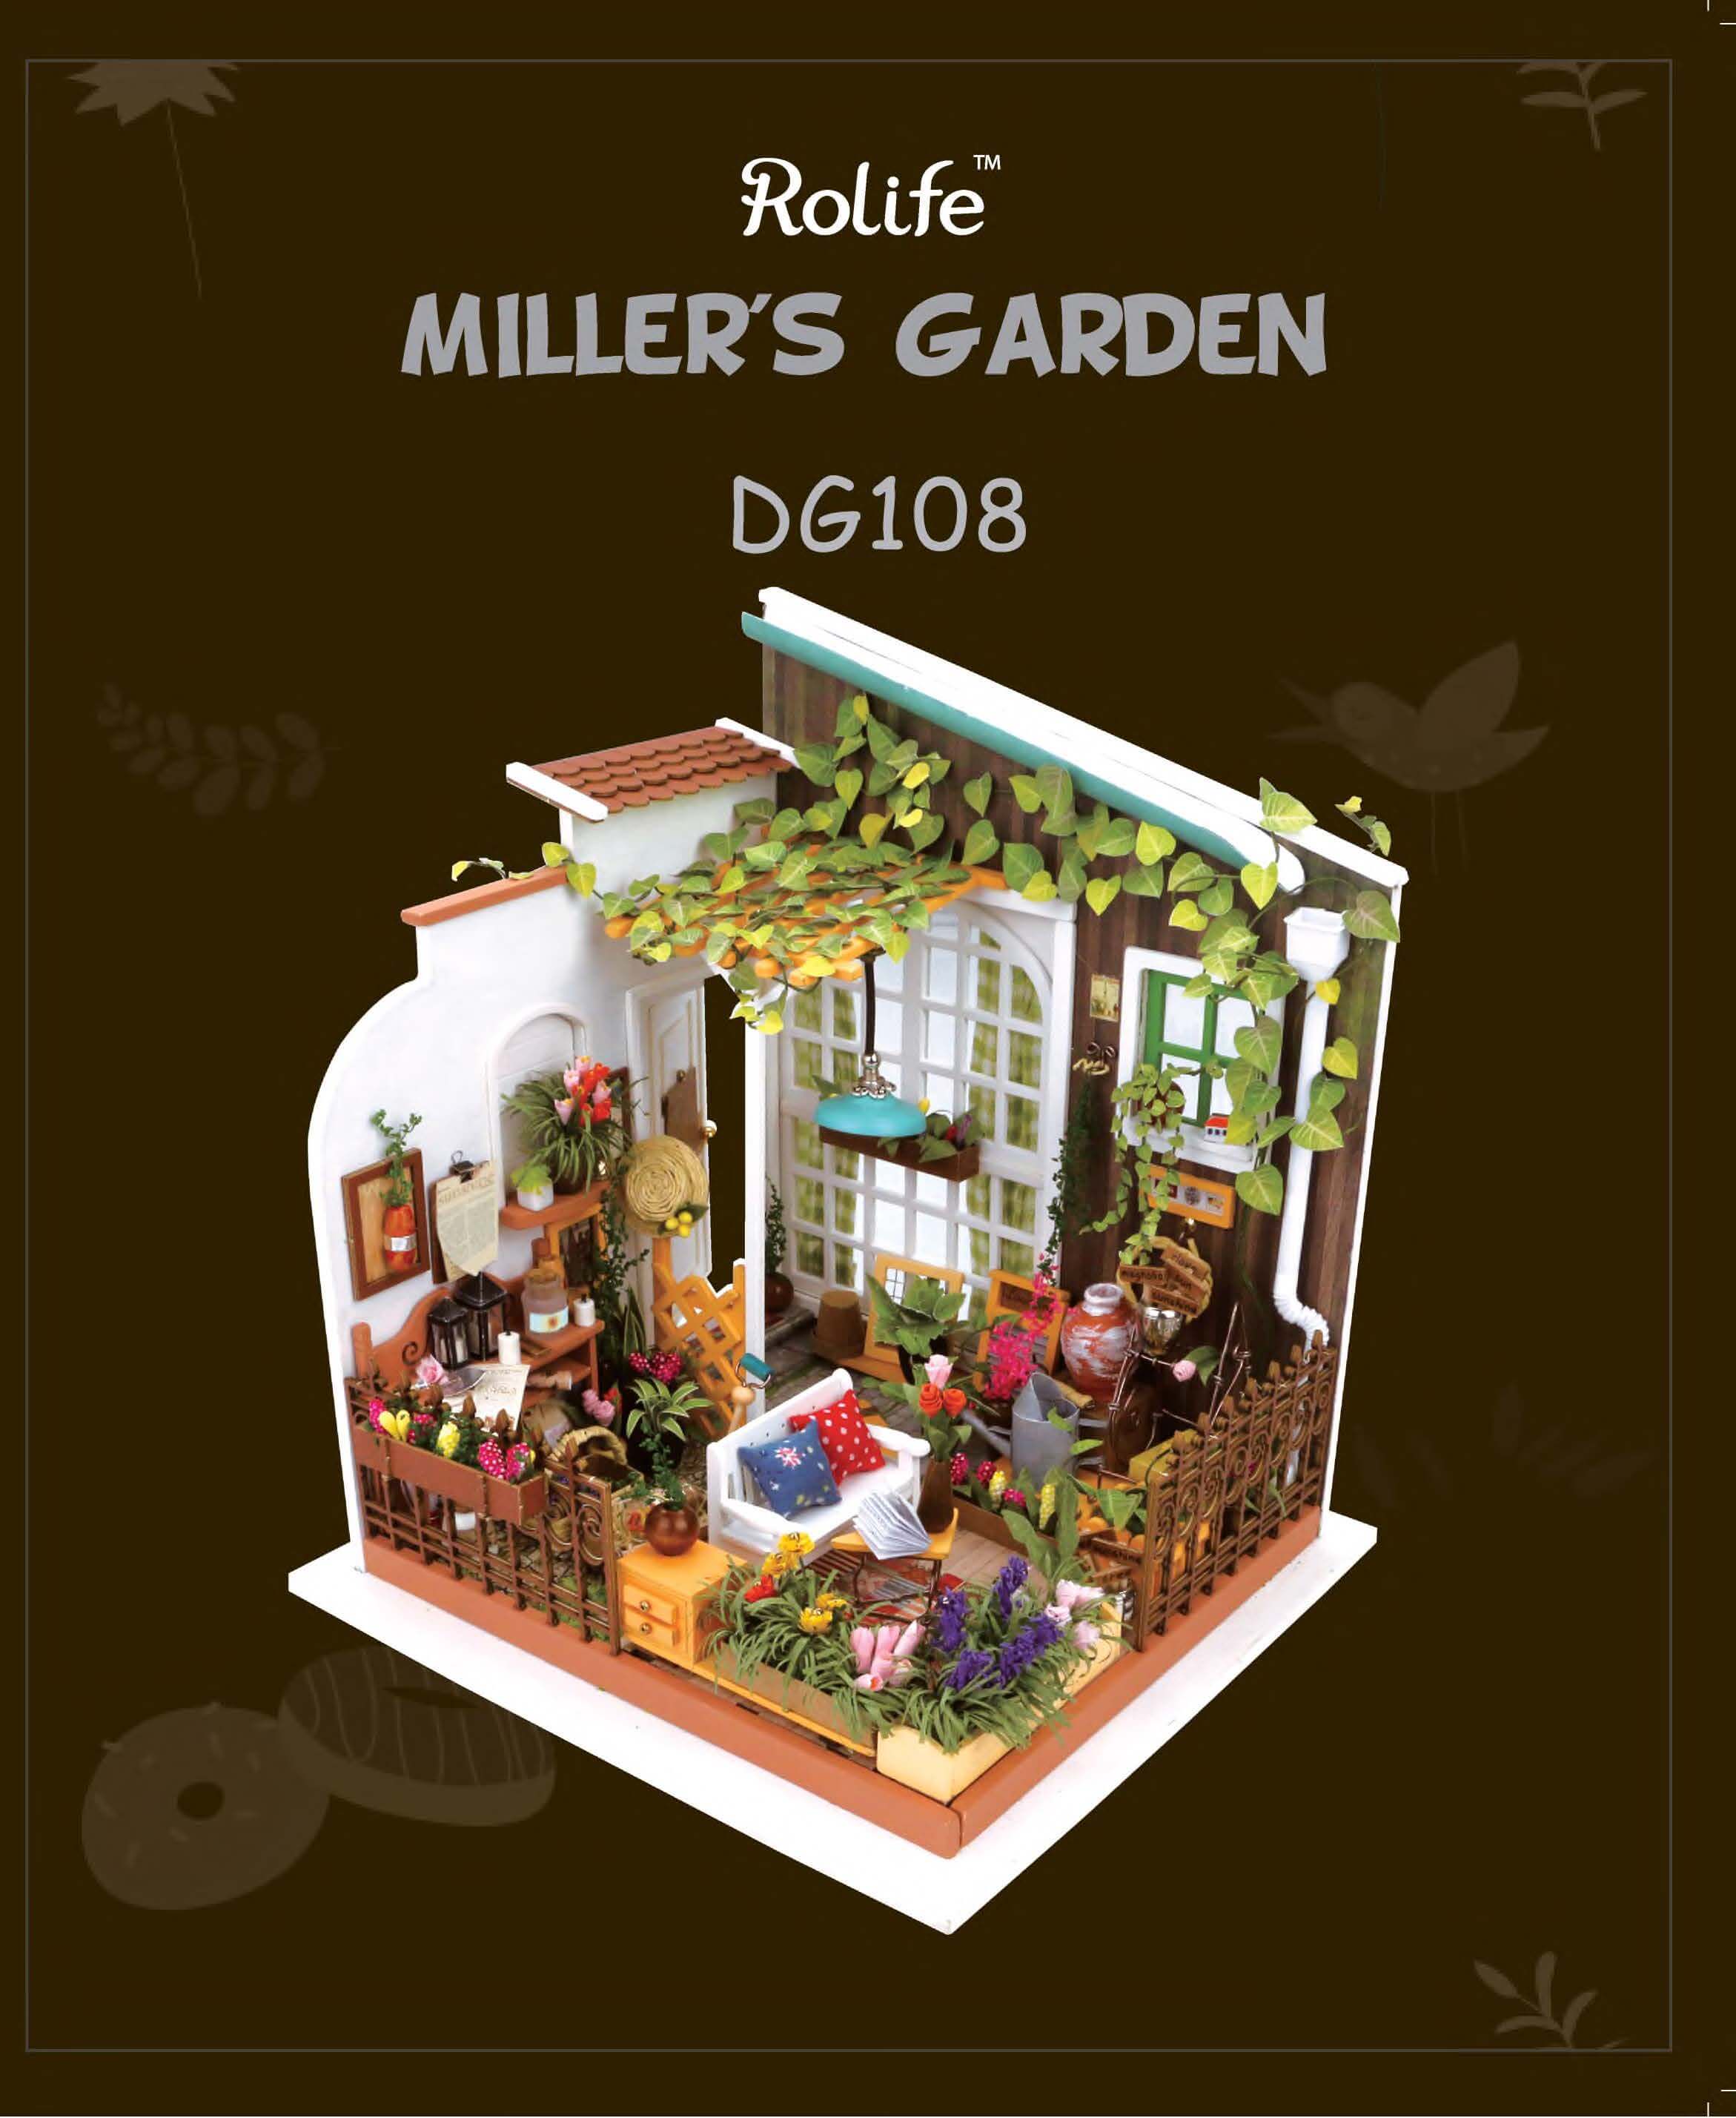 Maison miniature - Jardin de M. Miller Rolife DG108